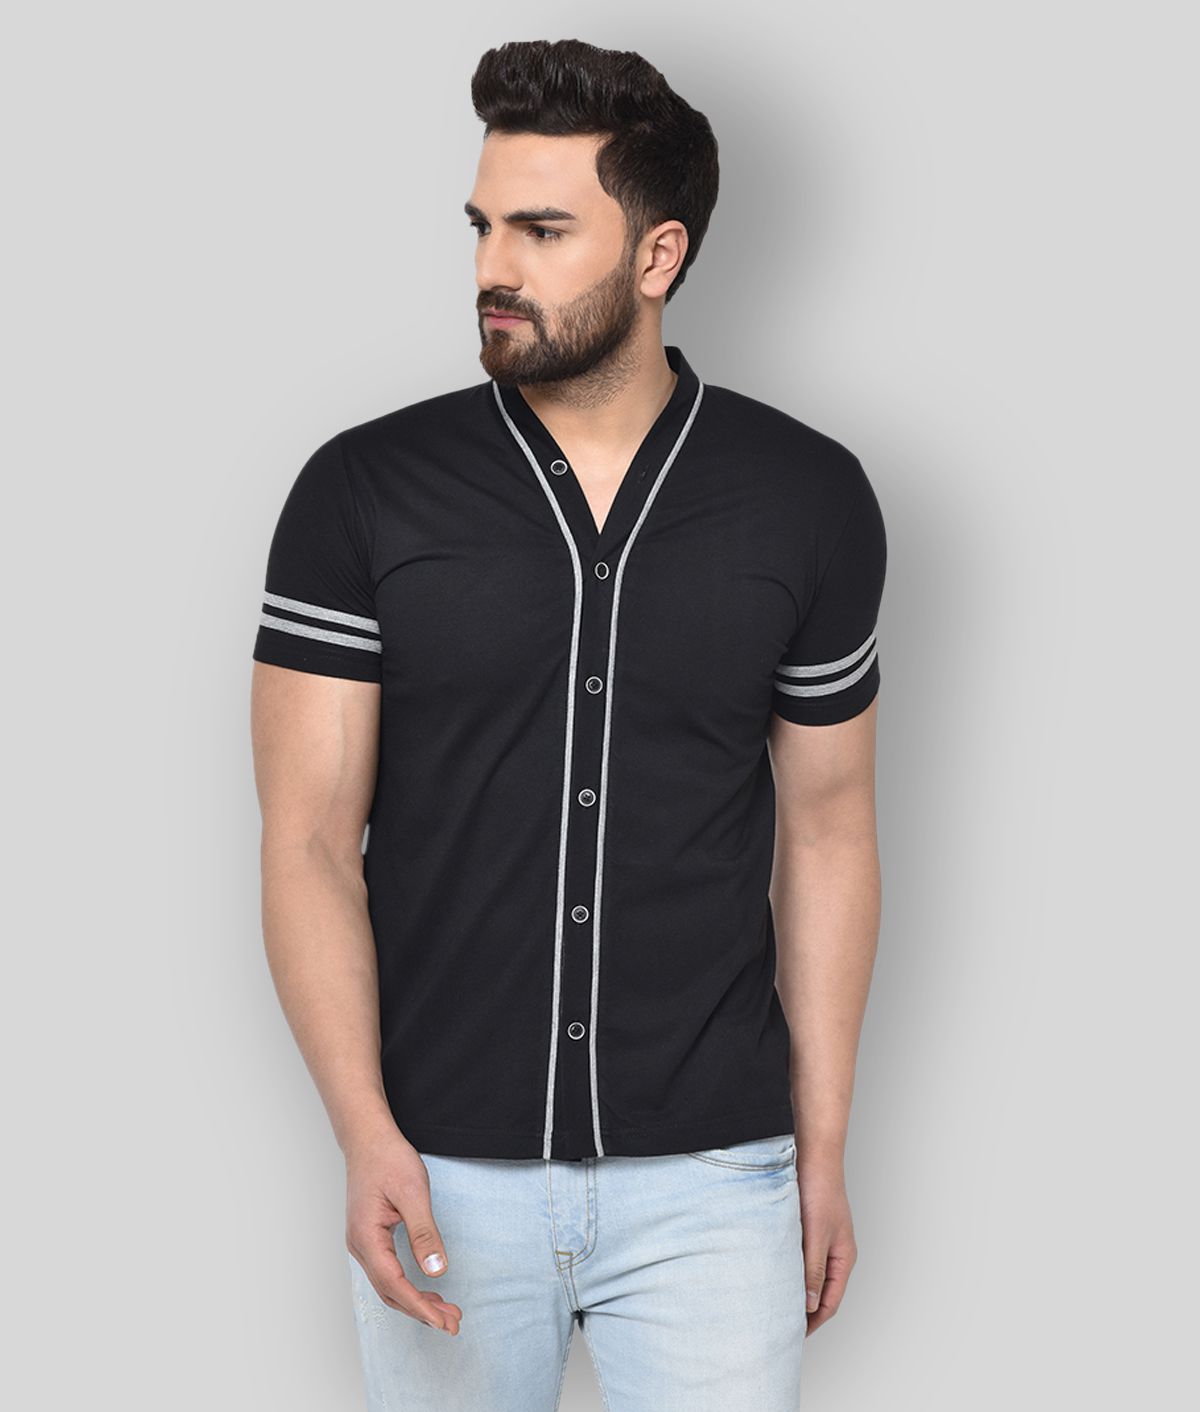     			Glito - Black Cotton Blend Regular Fit Men's T-Shirt ( Pack of 1 )